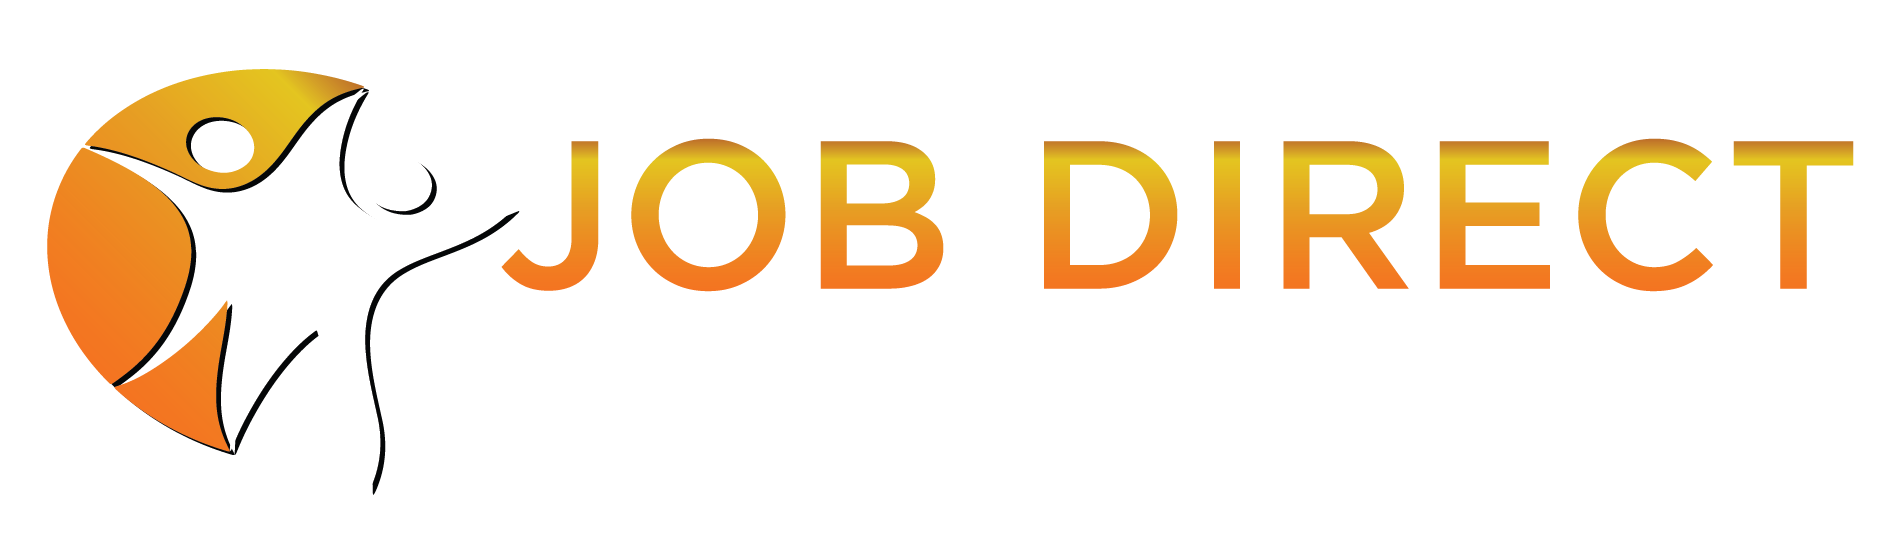 Job Direct Employment 